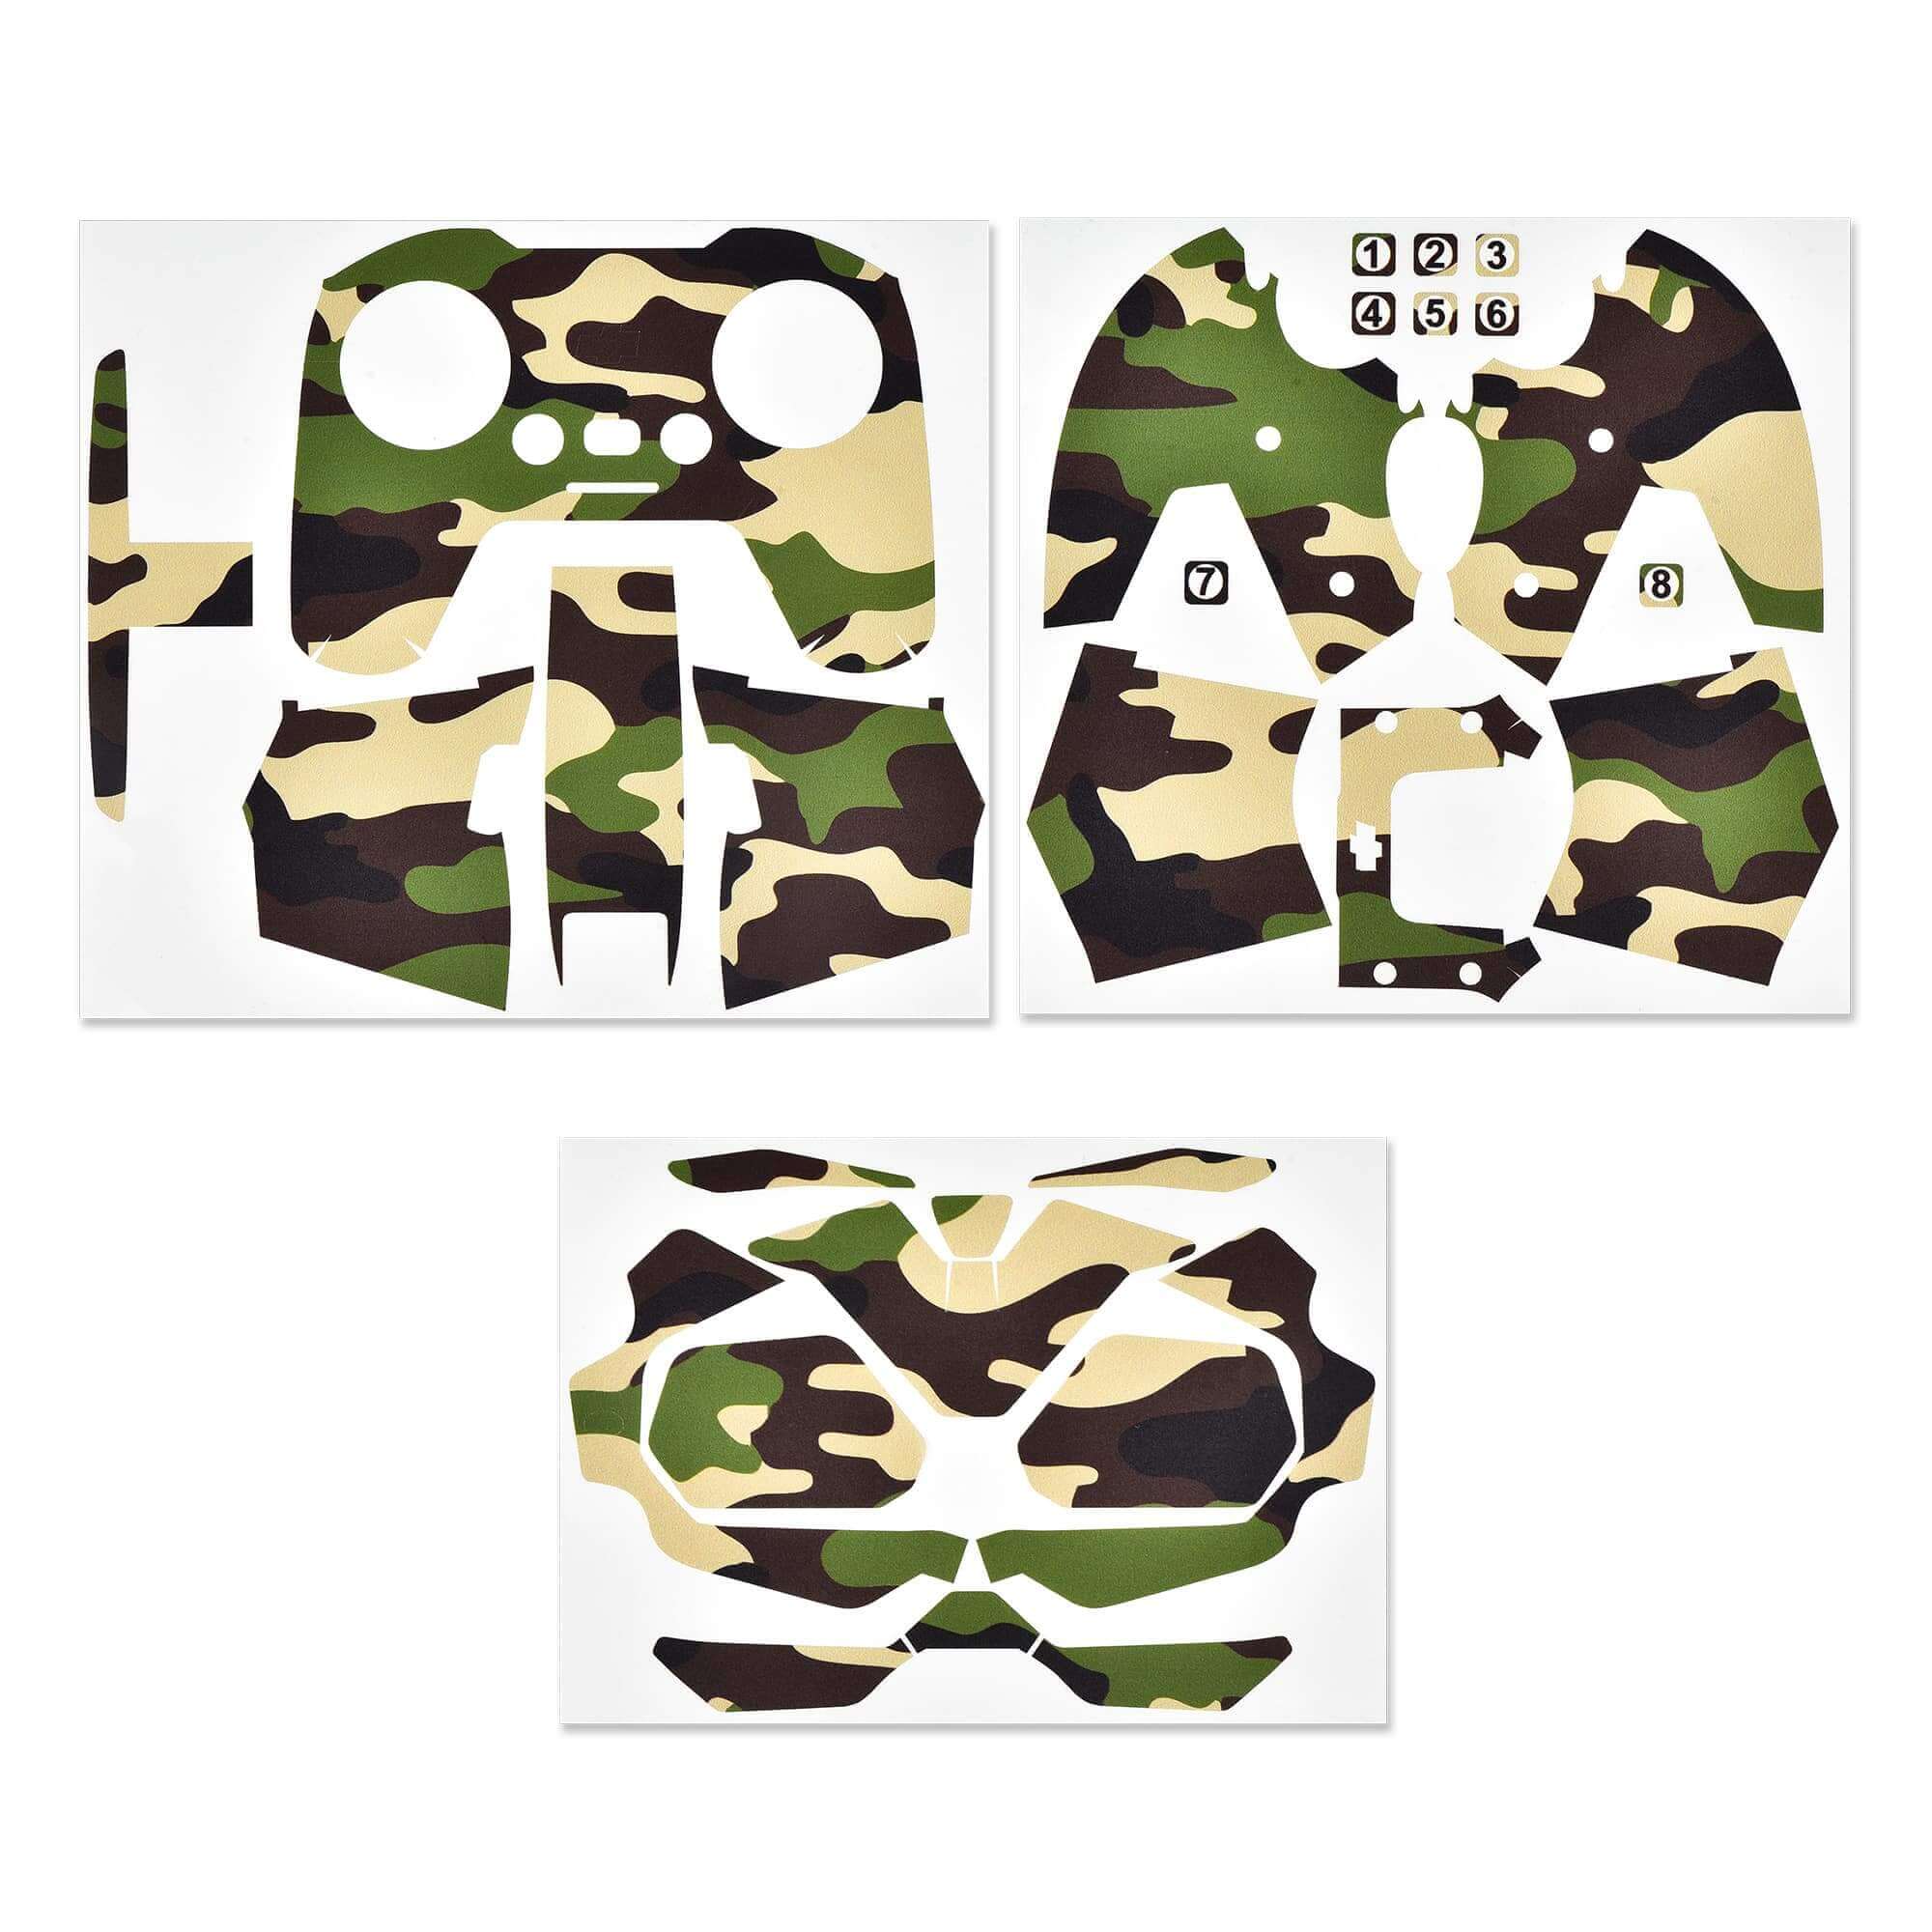 STARTRC DJI FPV Drohne Skin Aufkleber Set Camouflage Green